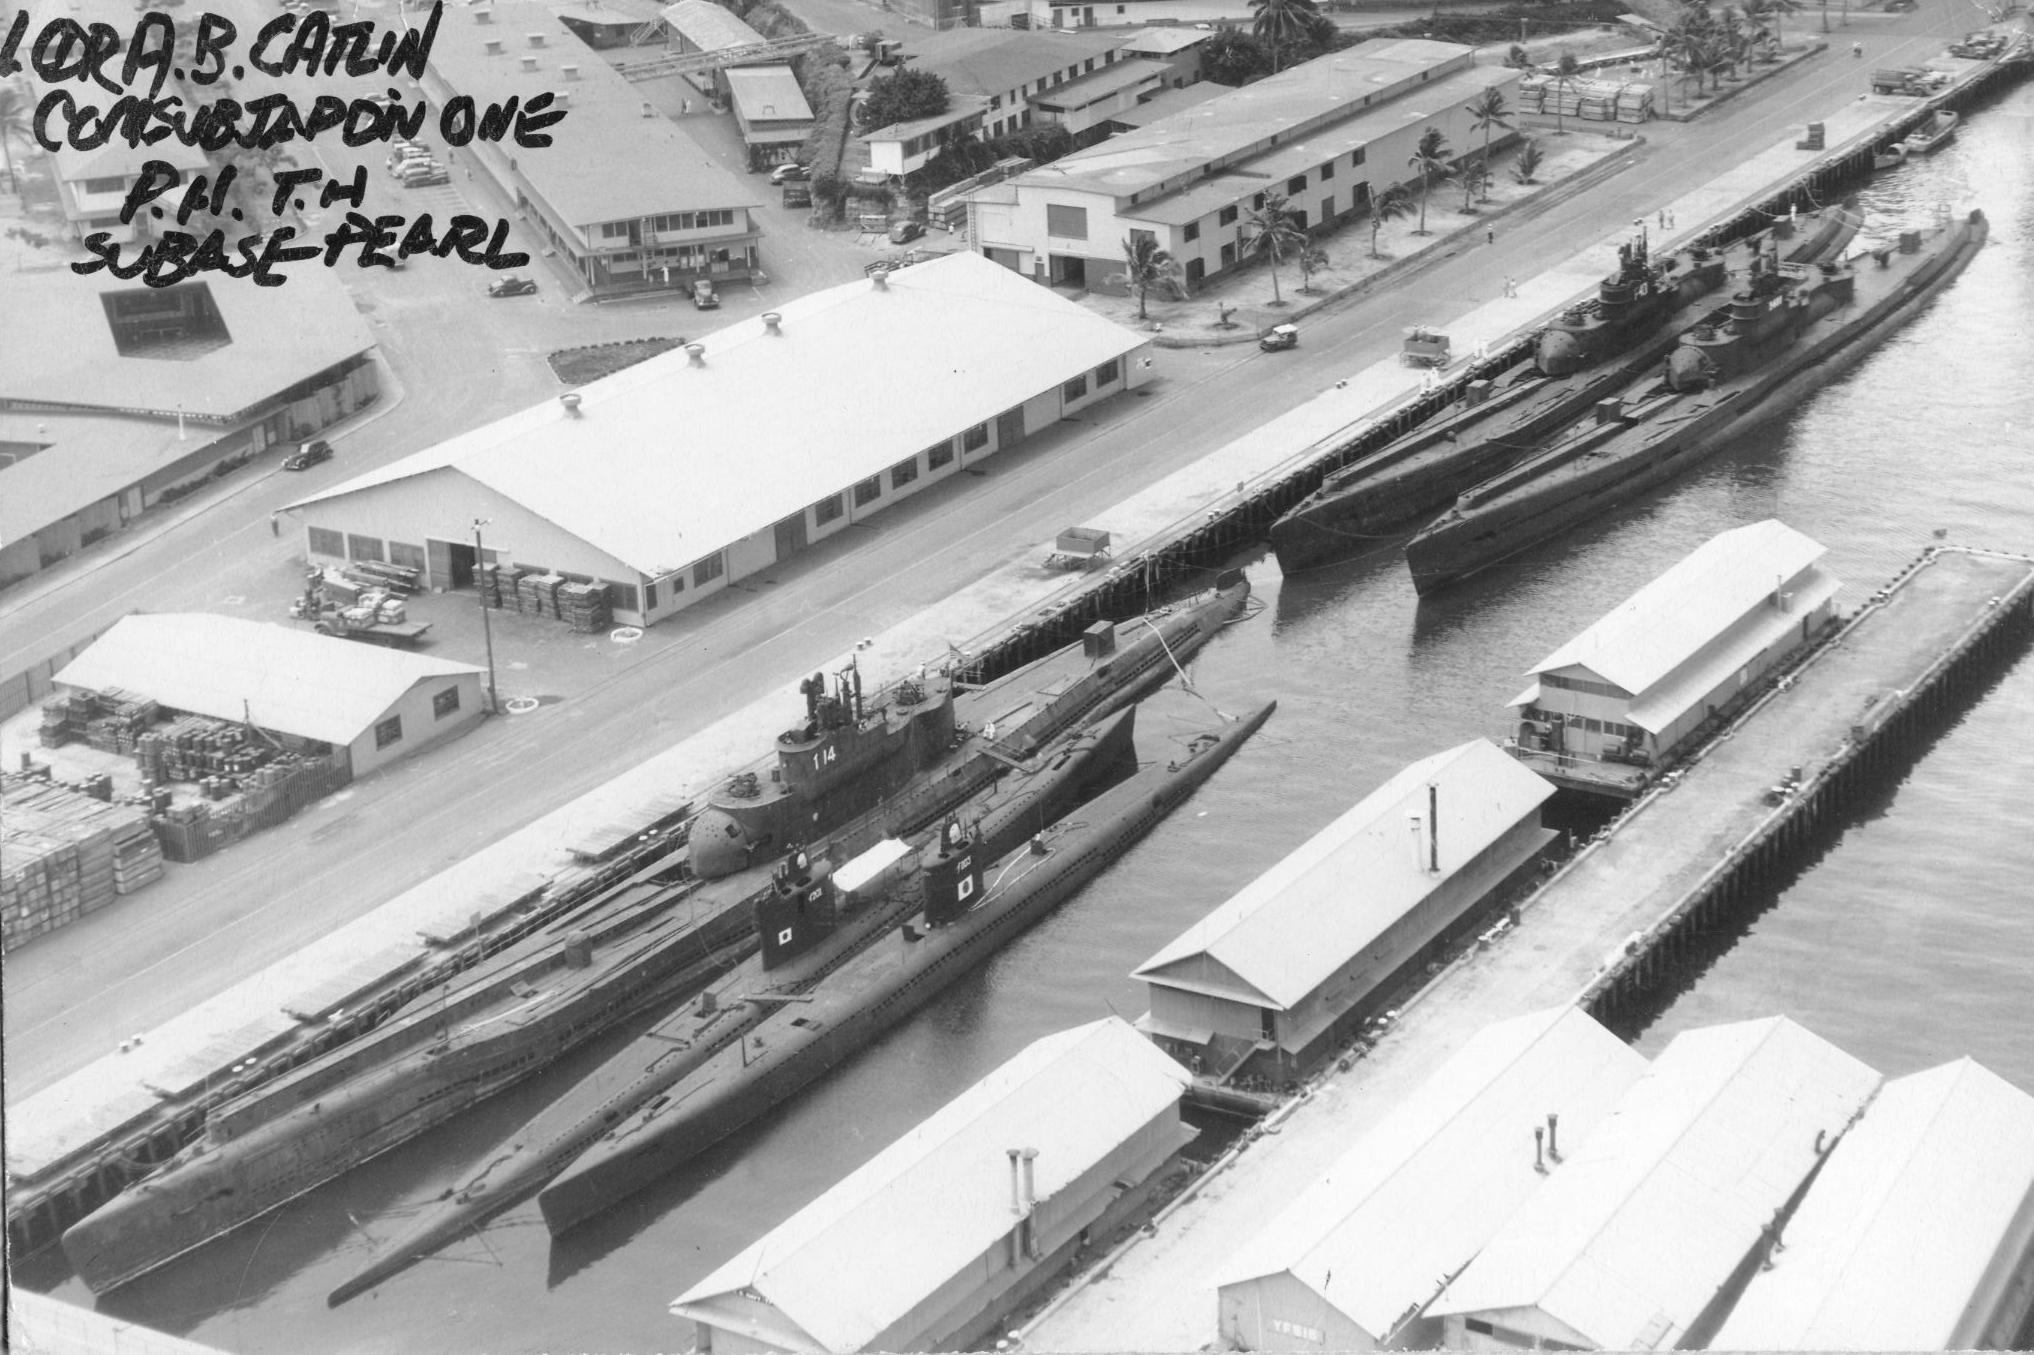 Historic photo: All five I-boats